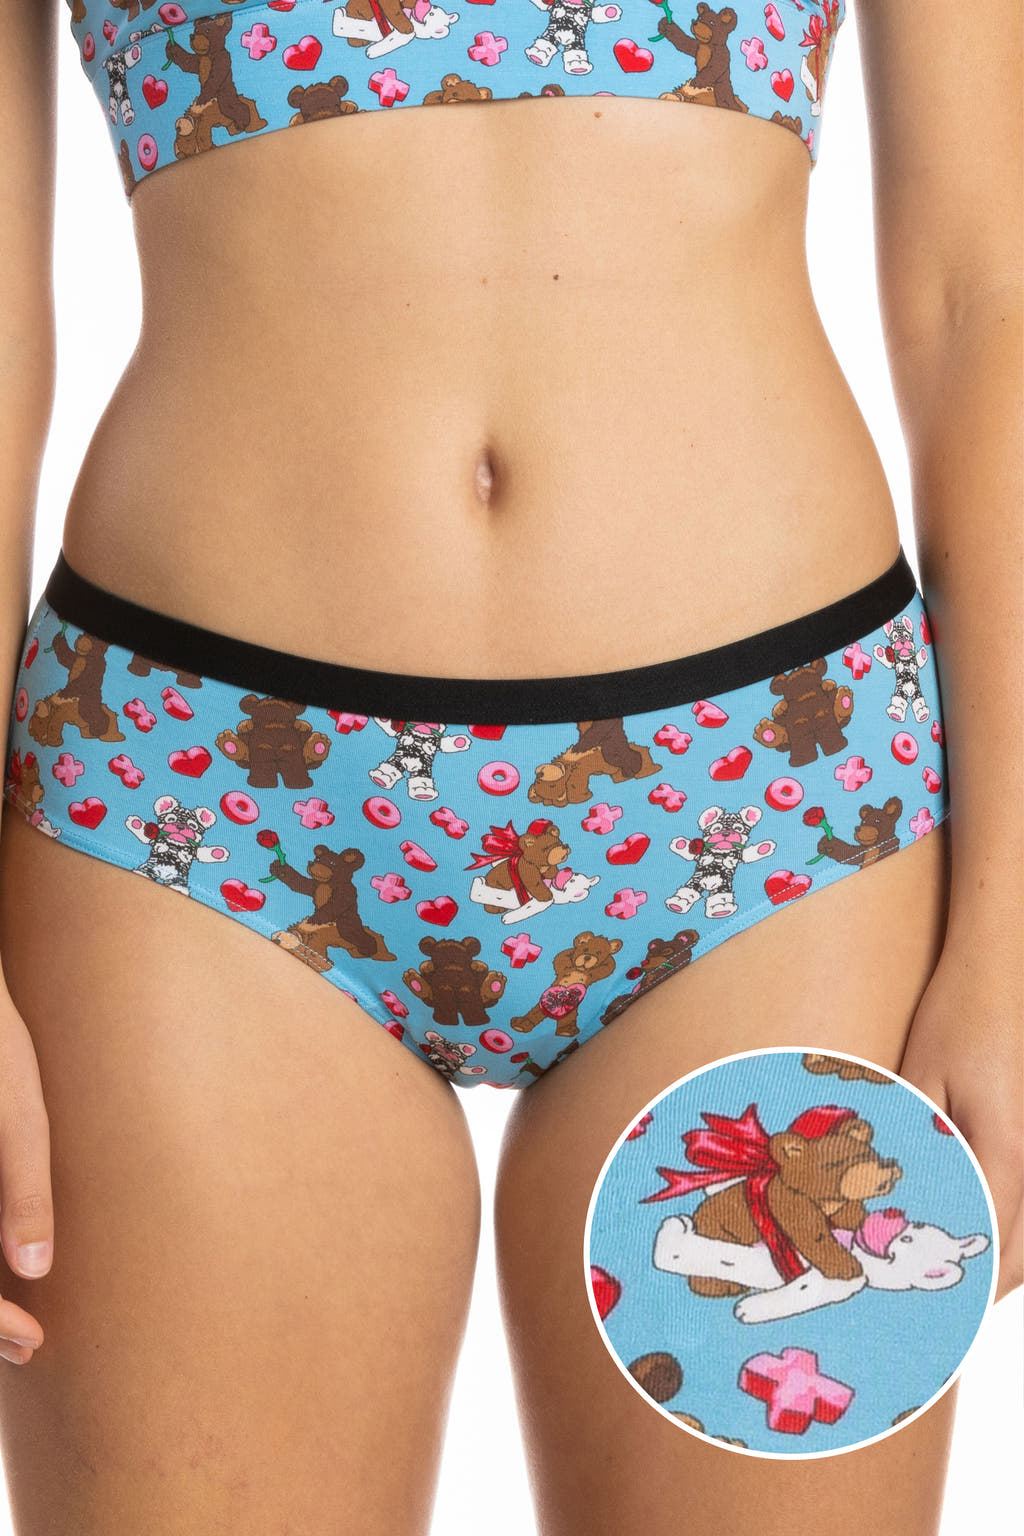 The Stuffed Animal | Teddy Bear Cheeky Underwear